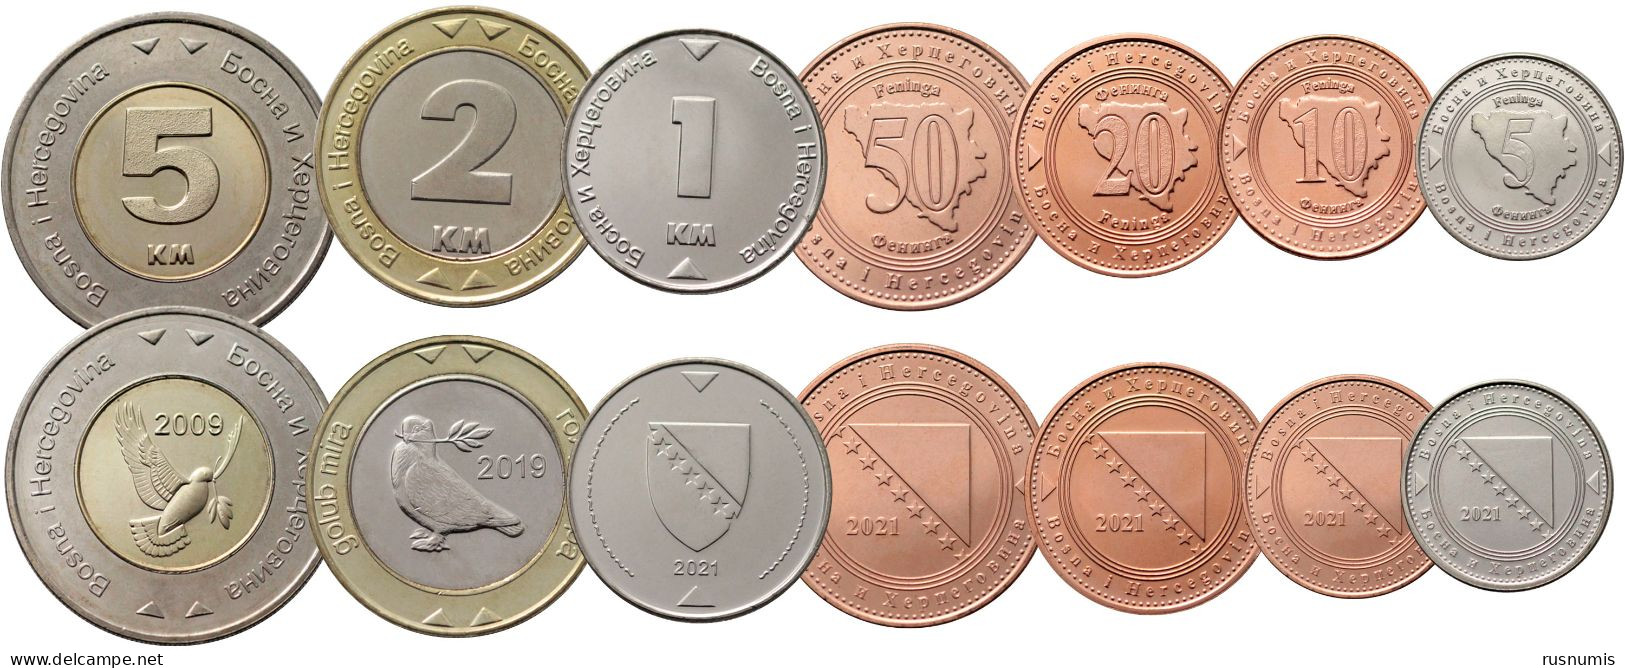 BOSNIA AND HERZEGOVINA 7 COINS SET 5 10 20 50 FENINGA 1 2 5 KM MARAKA BIMETAL 2009 2021 UNC - Bosnia Erzegovina